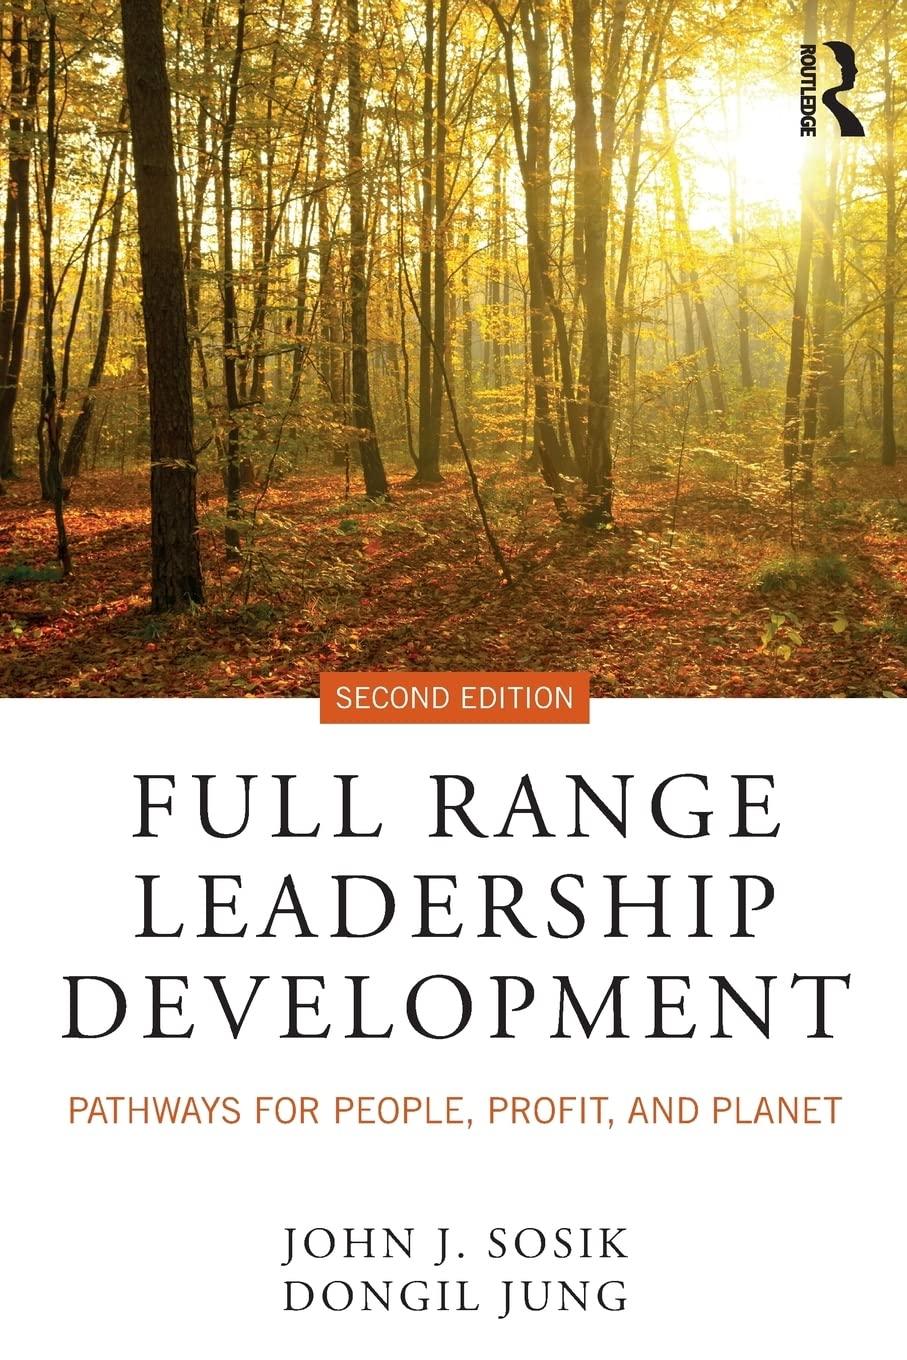 full range leadership development pathways for people profit and planet 2nd edition john j. sosik, dongil